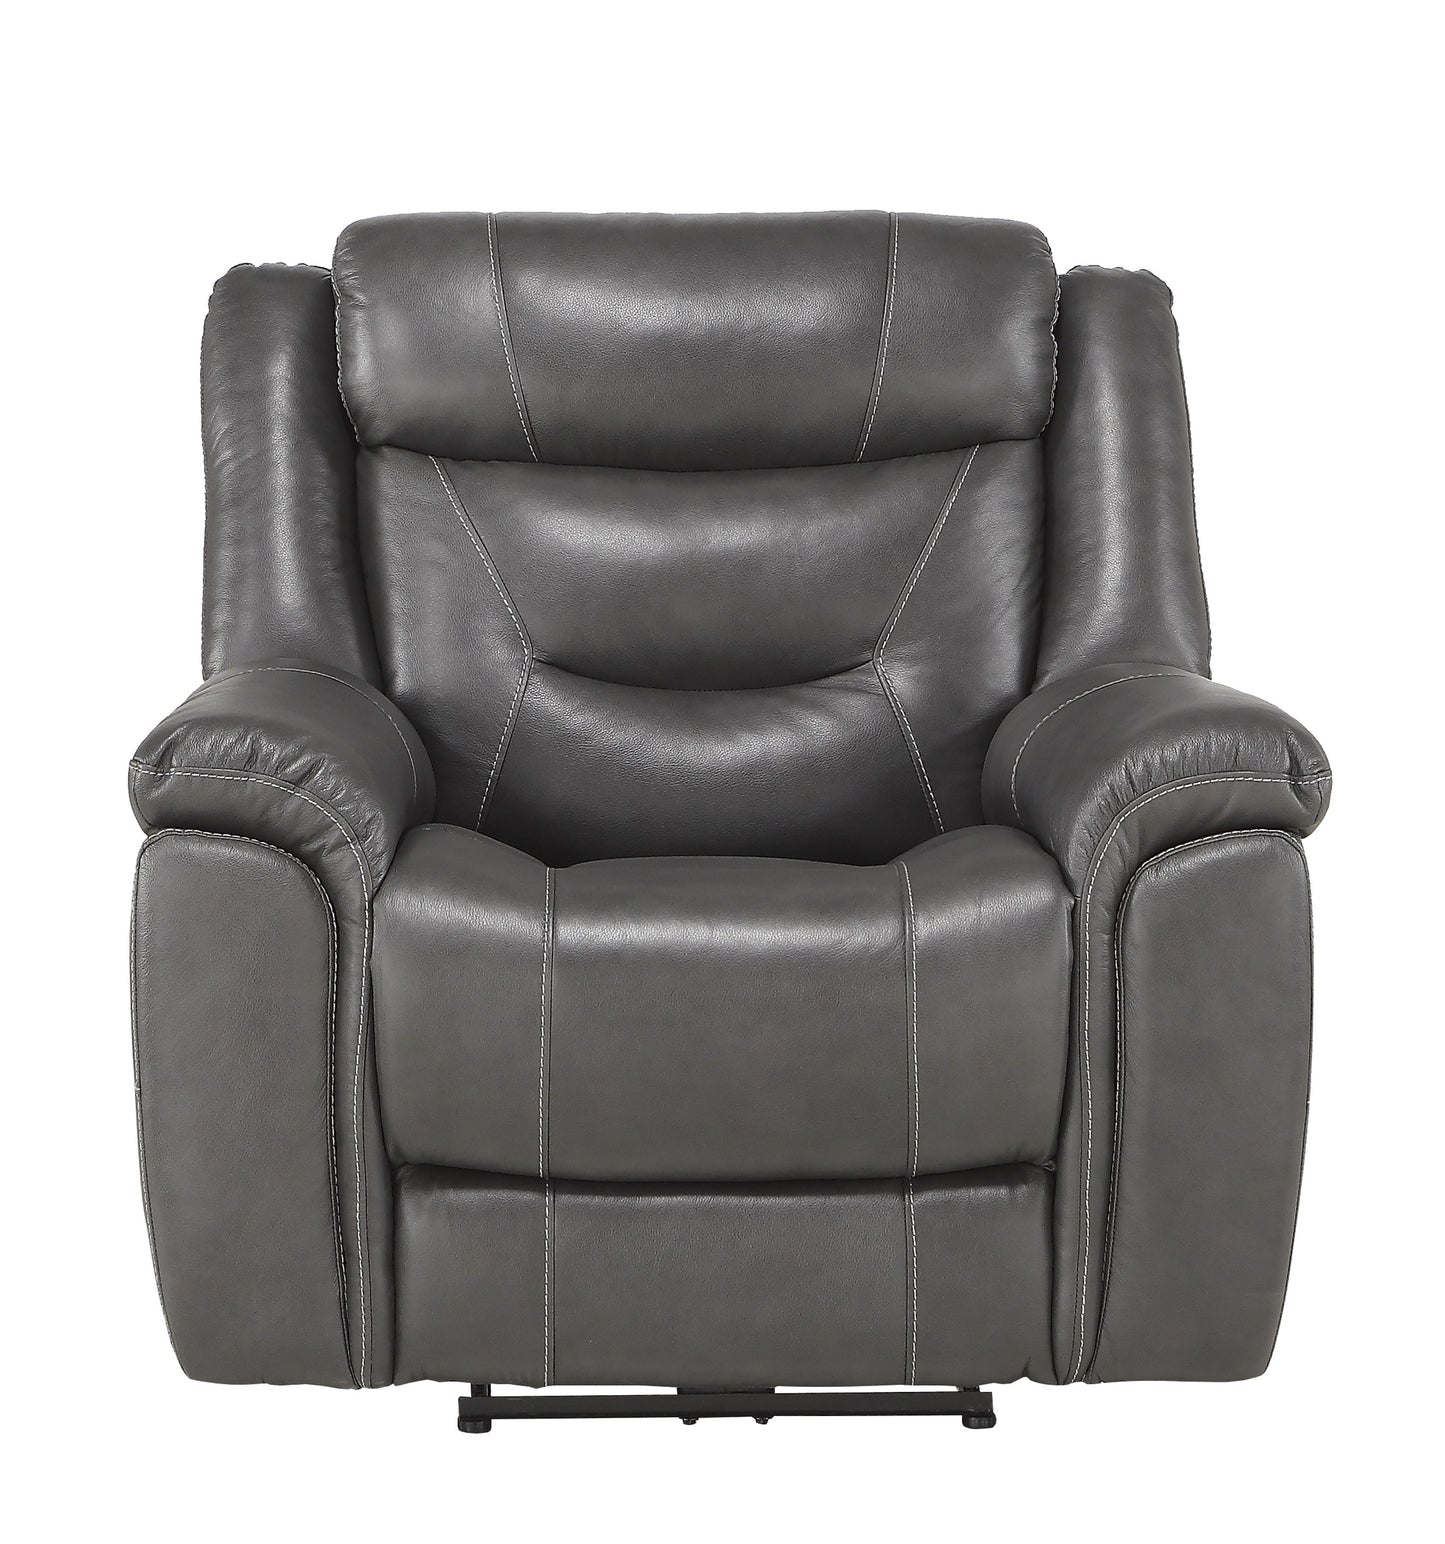 Kennett Italian Leather Power Recliner Chair Dark Grey